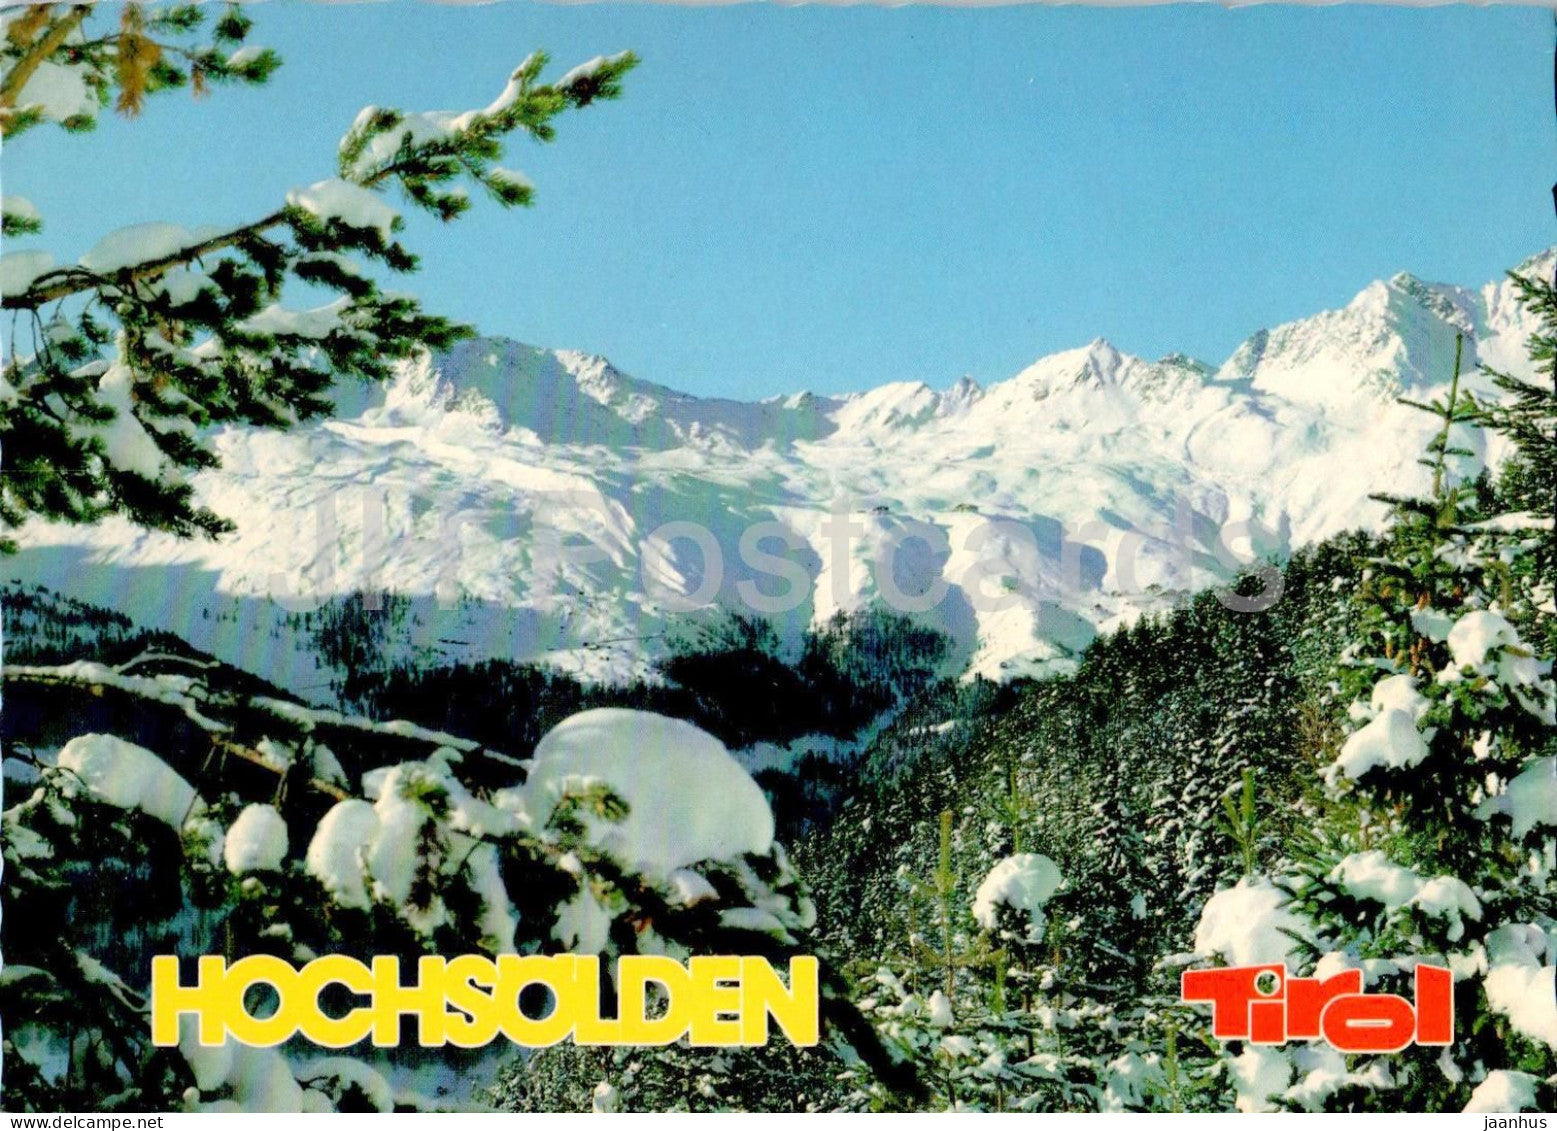 Hochsolden 2070 m - Oetztal - Tirol - 930 - Austria – used – JH Postcards